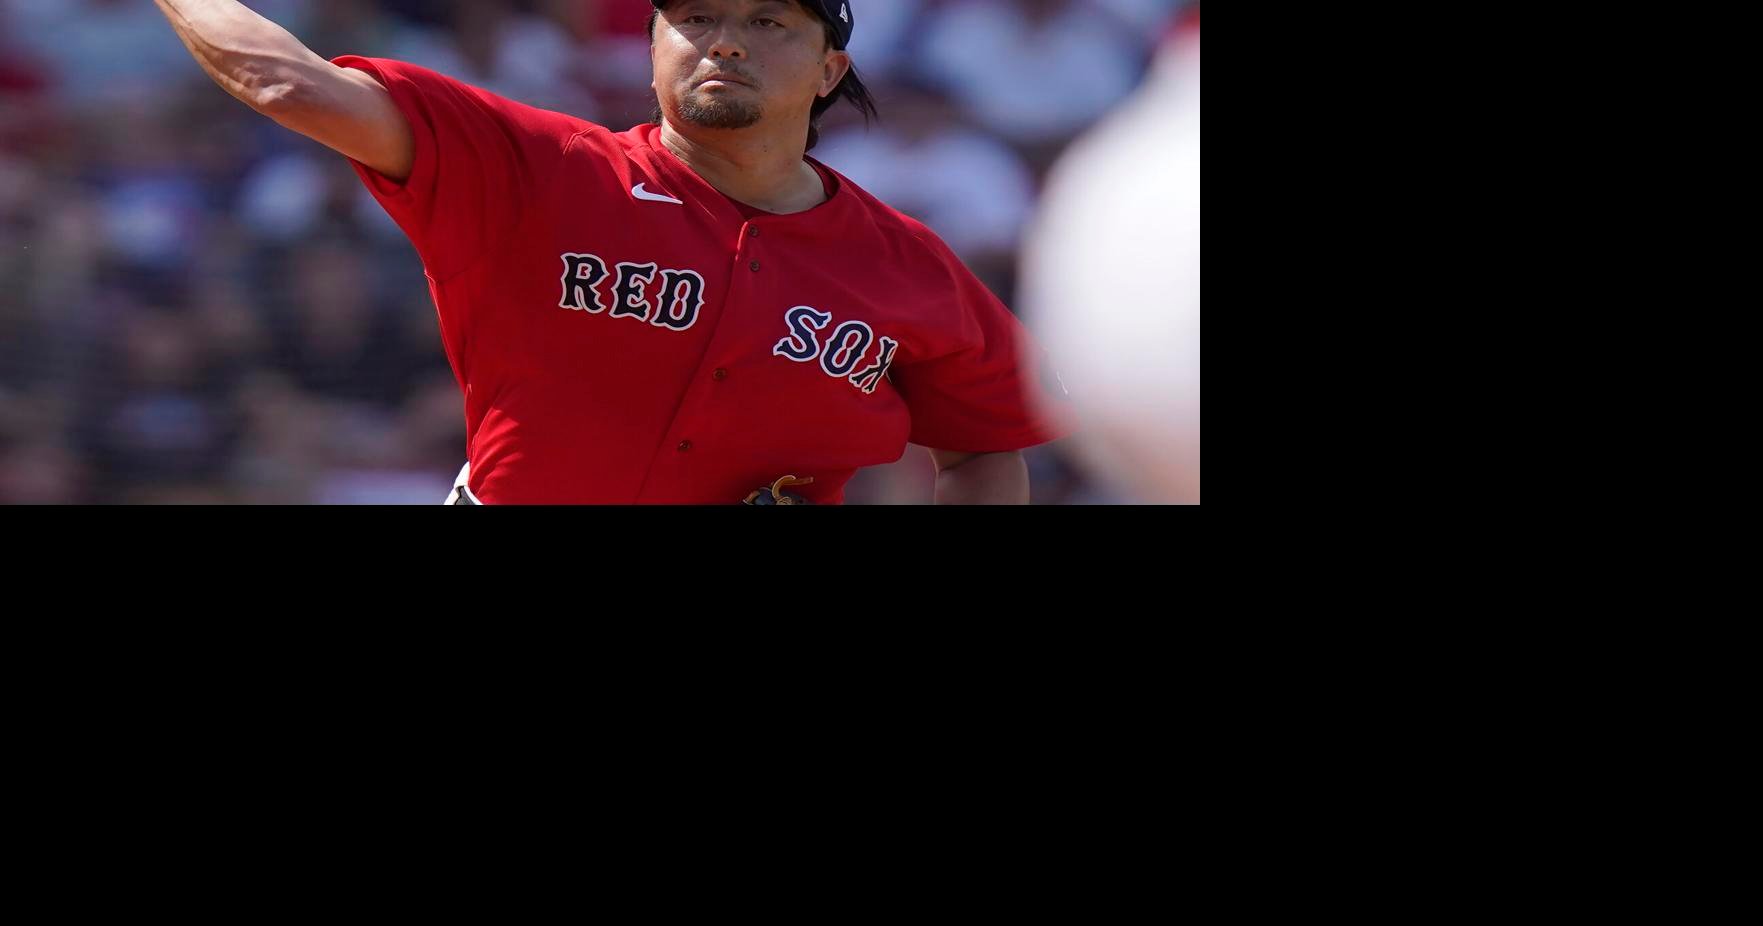 Red Sox' David Ortiz gets swing back in sweep - The Boston Globe